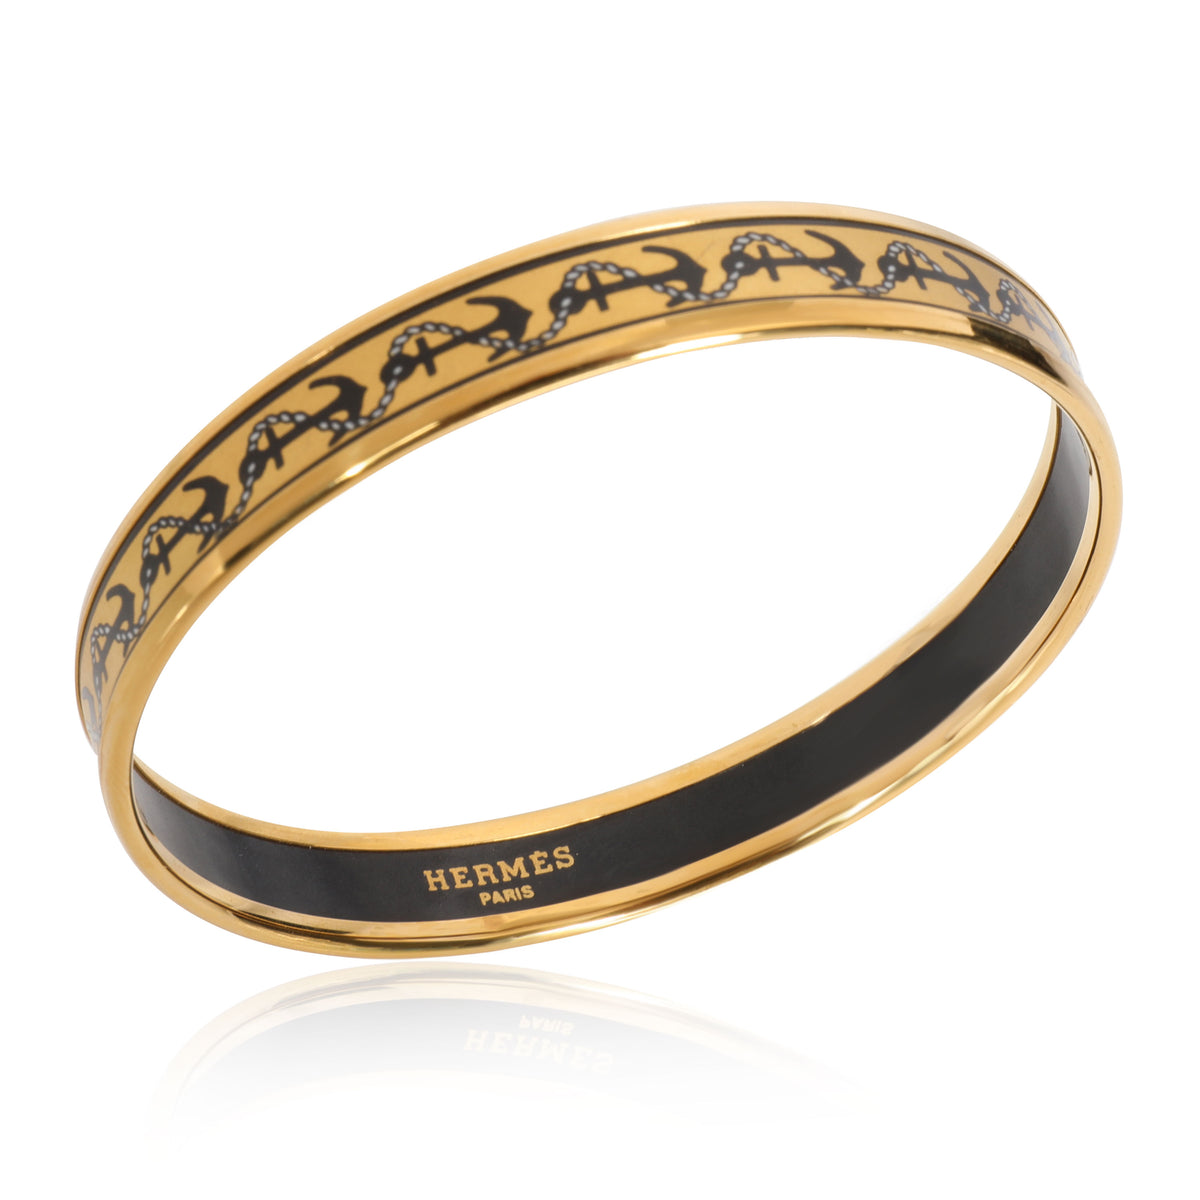 Hermès Gold-Plated Narrow Enamel Bangle